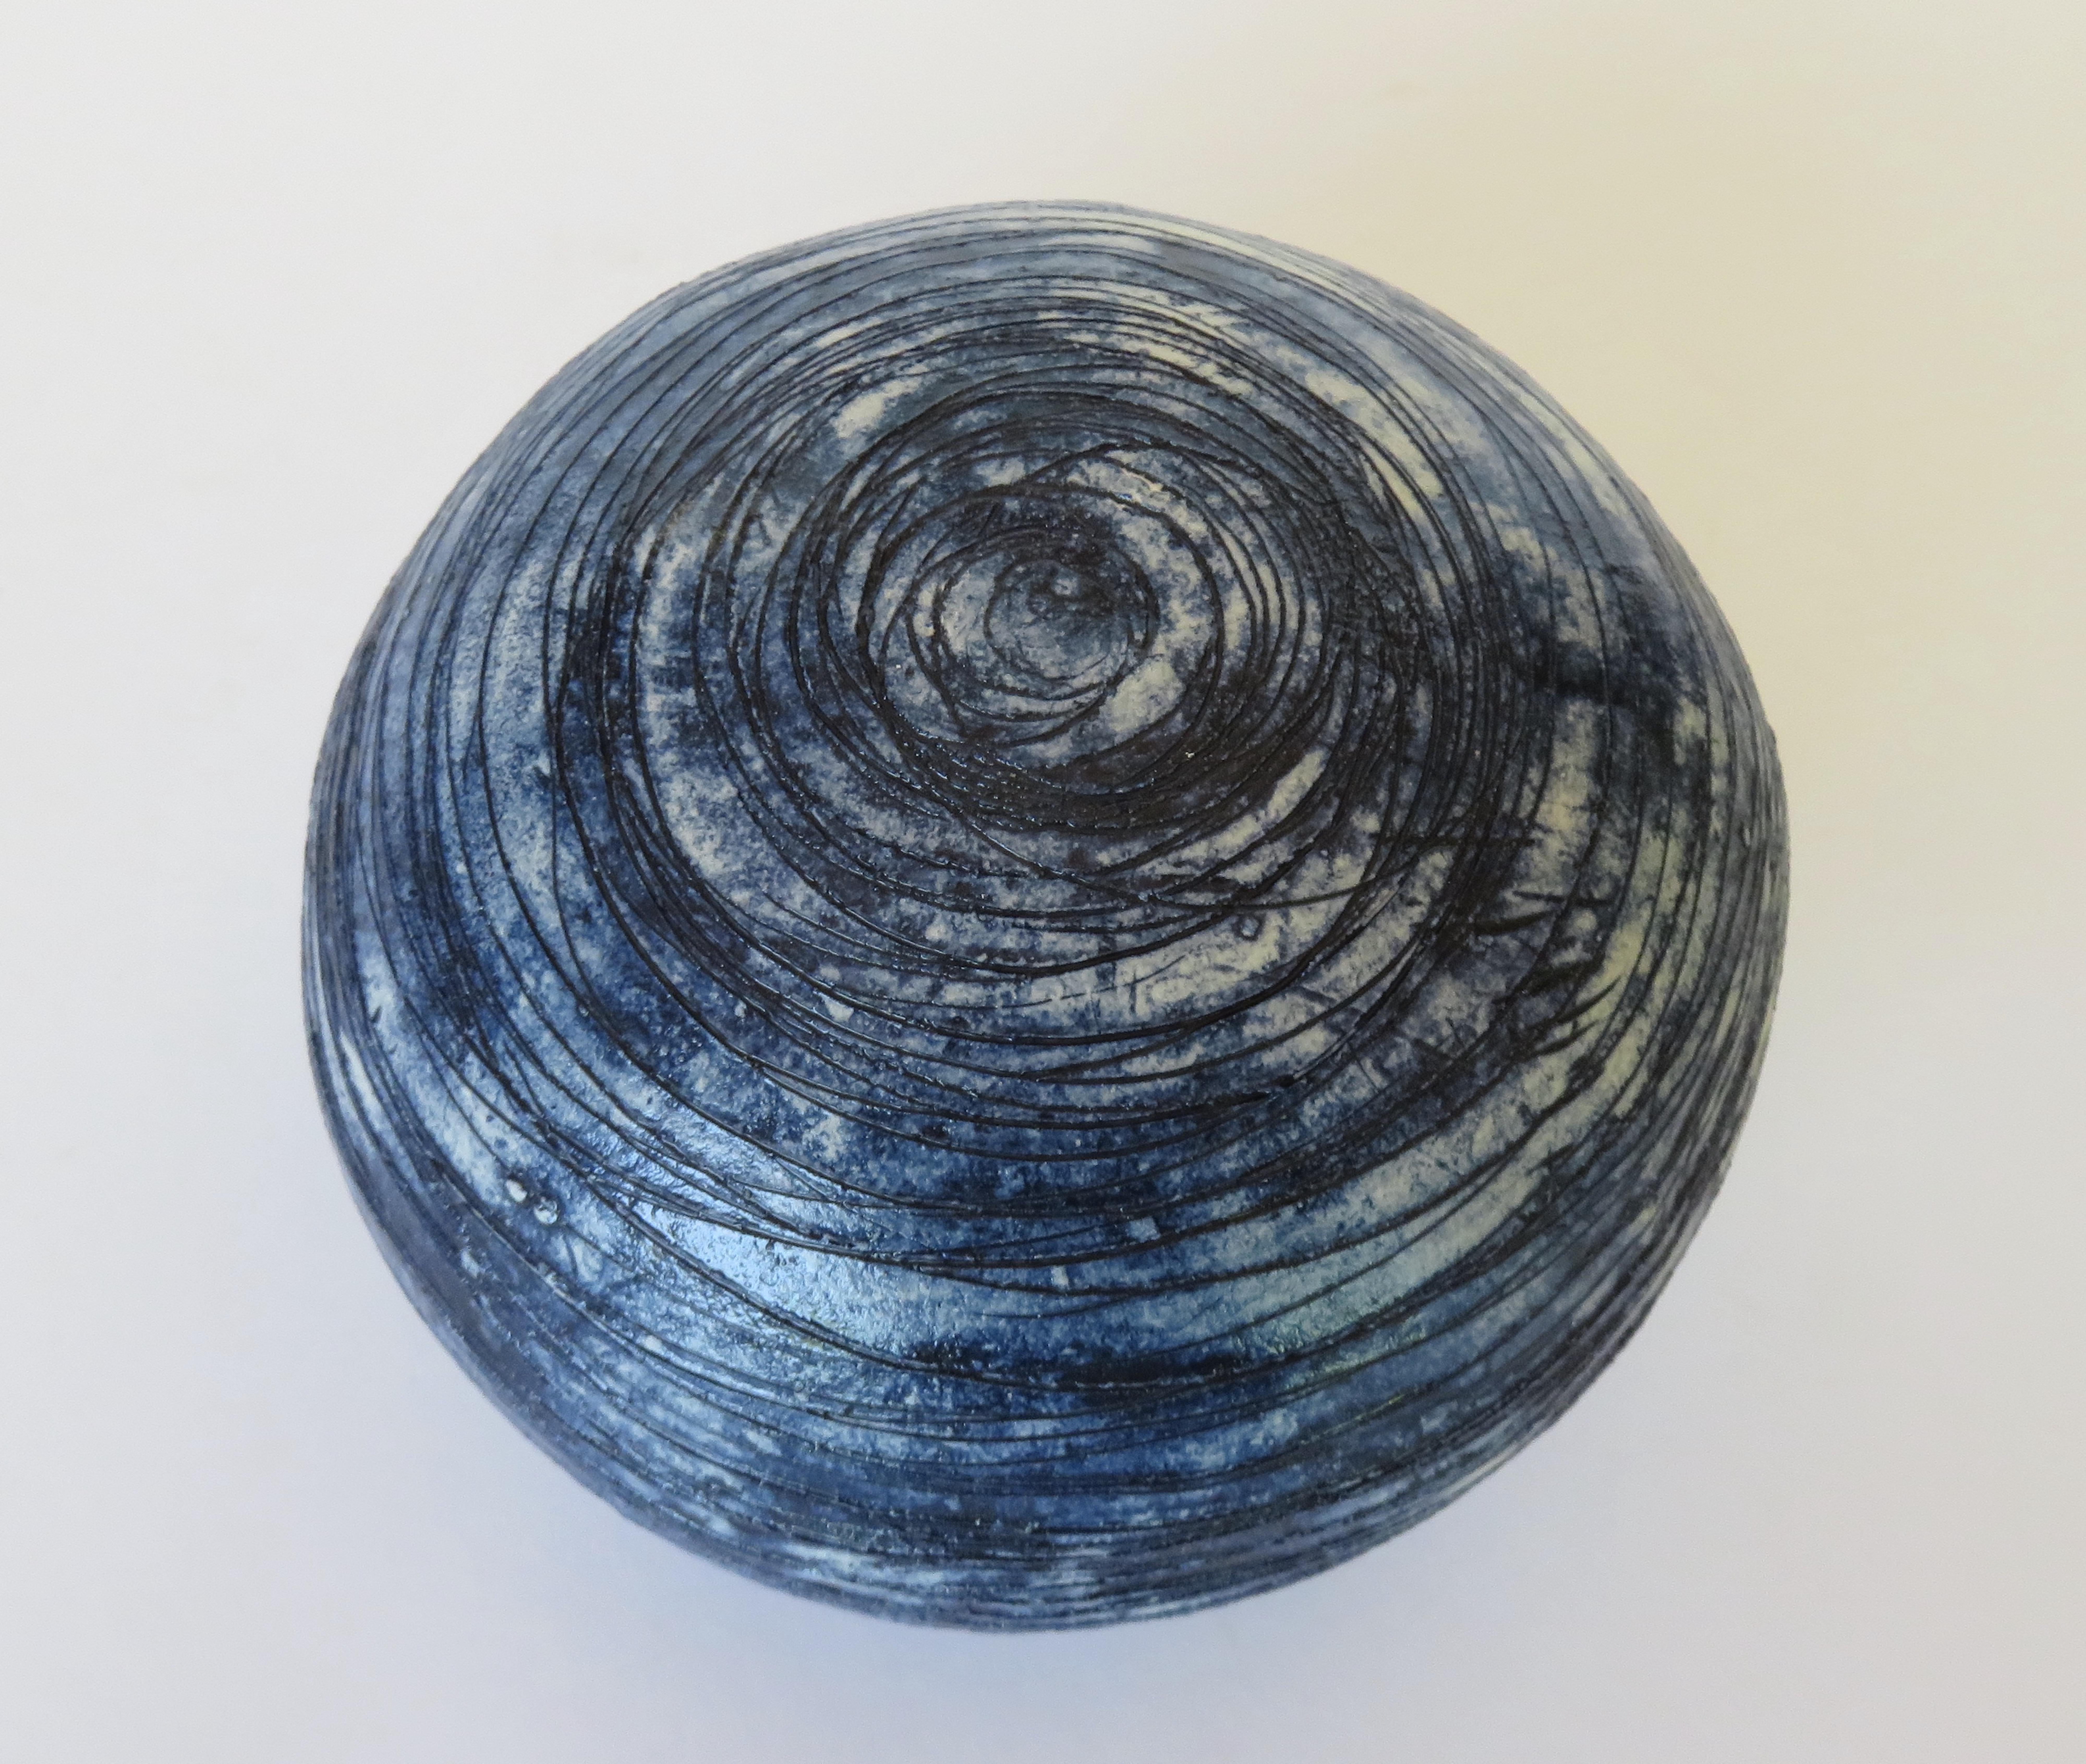 Hand Carved Sphere, Ceramic Sculpture in Deep Blue Wash 5